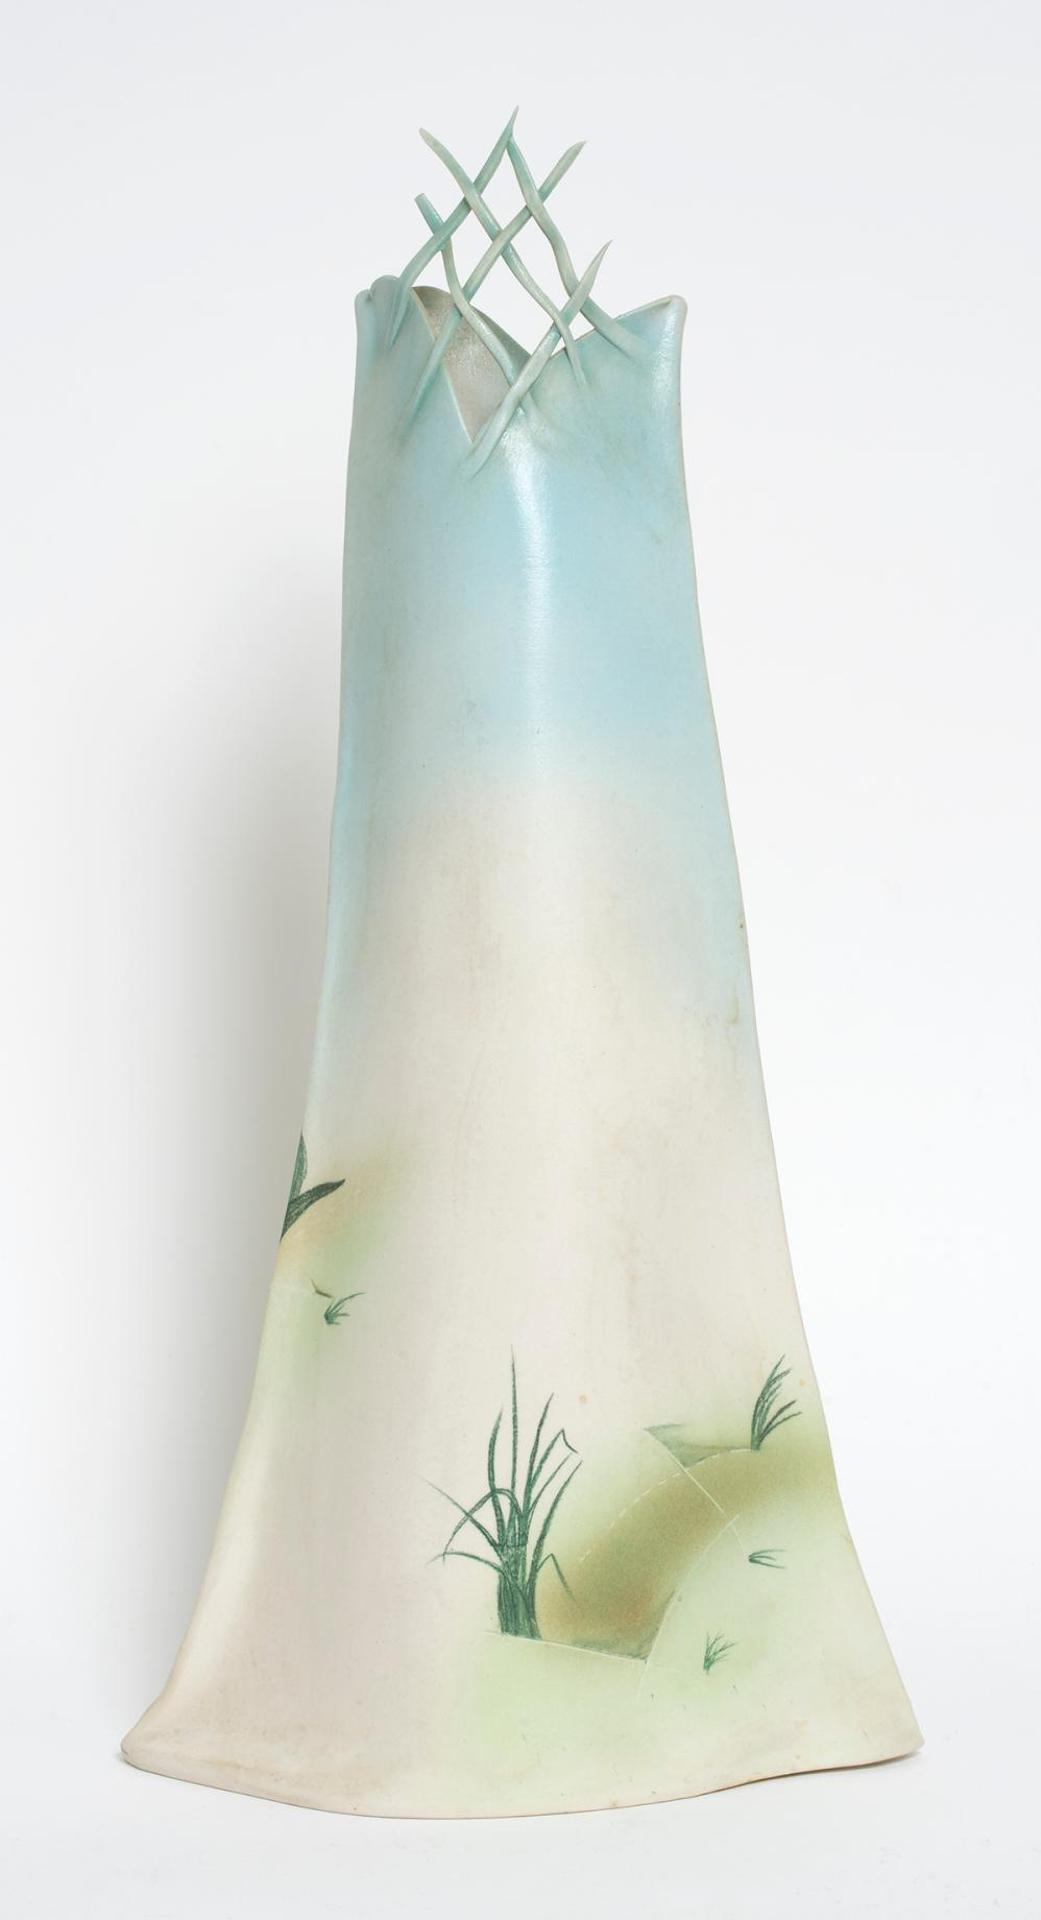 Jeannie Mah (1952) - Vase